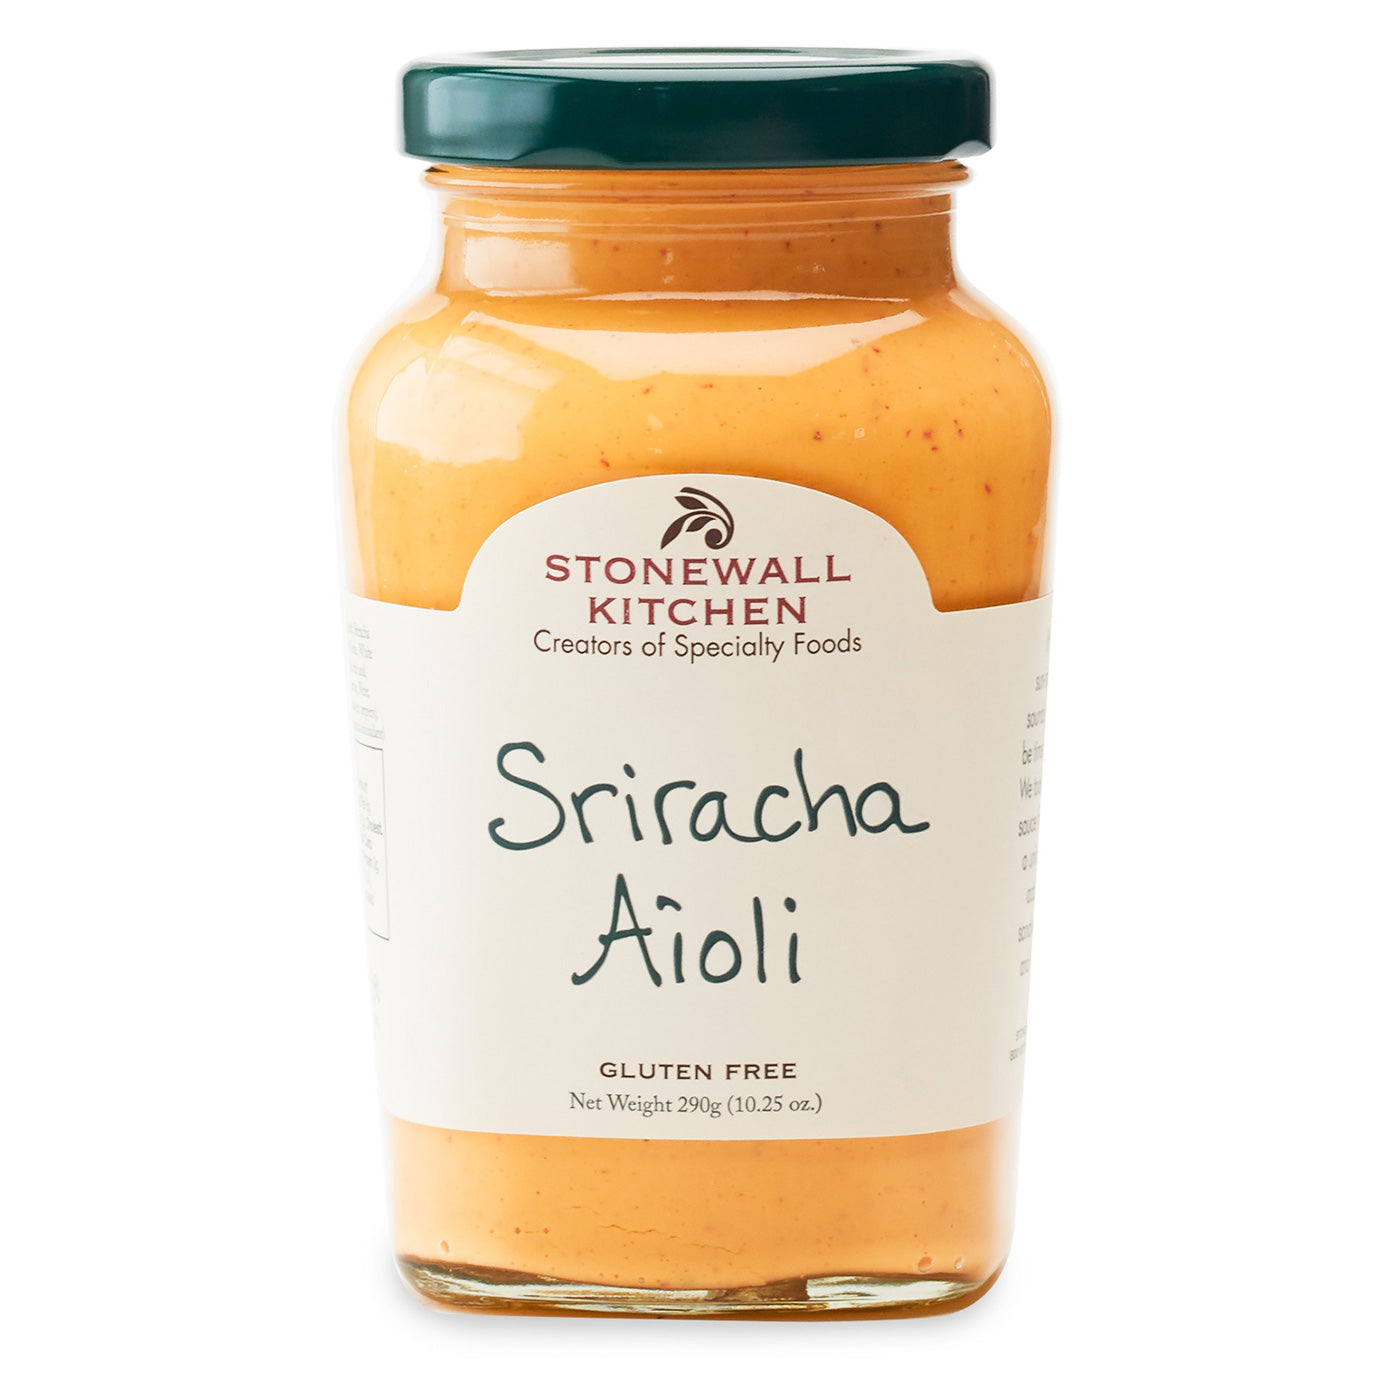 Jar of Stonewall Kitchen Sriracha Aioli